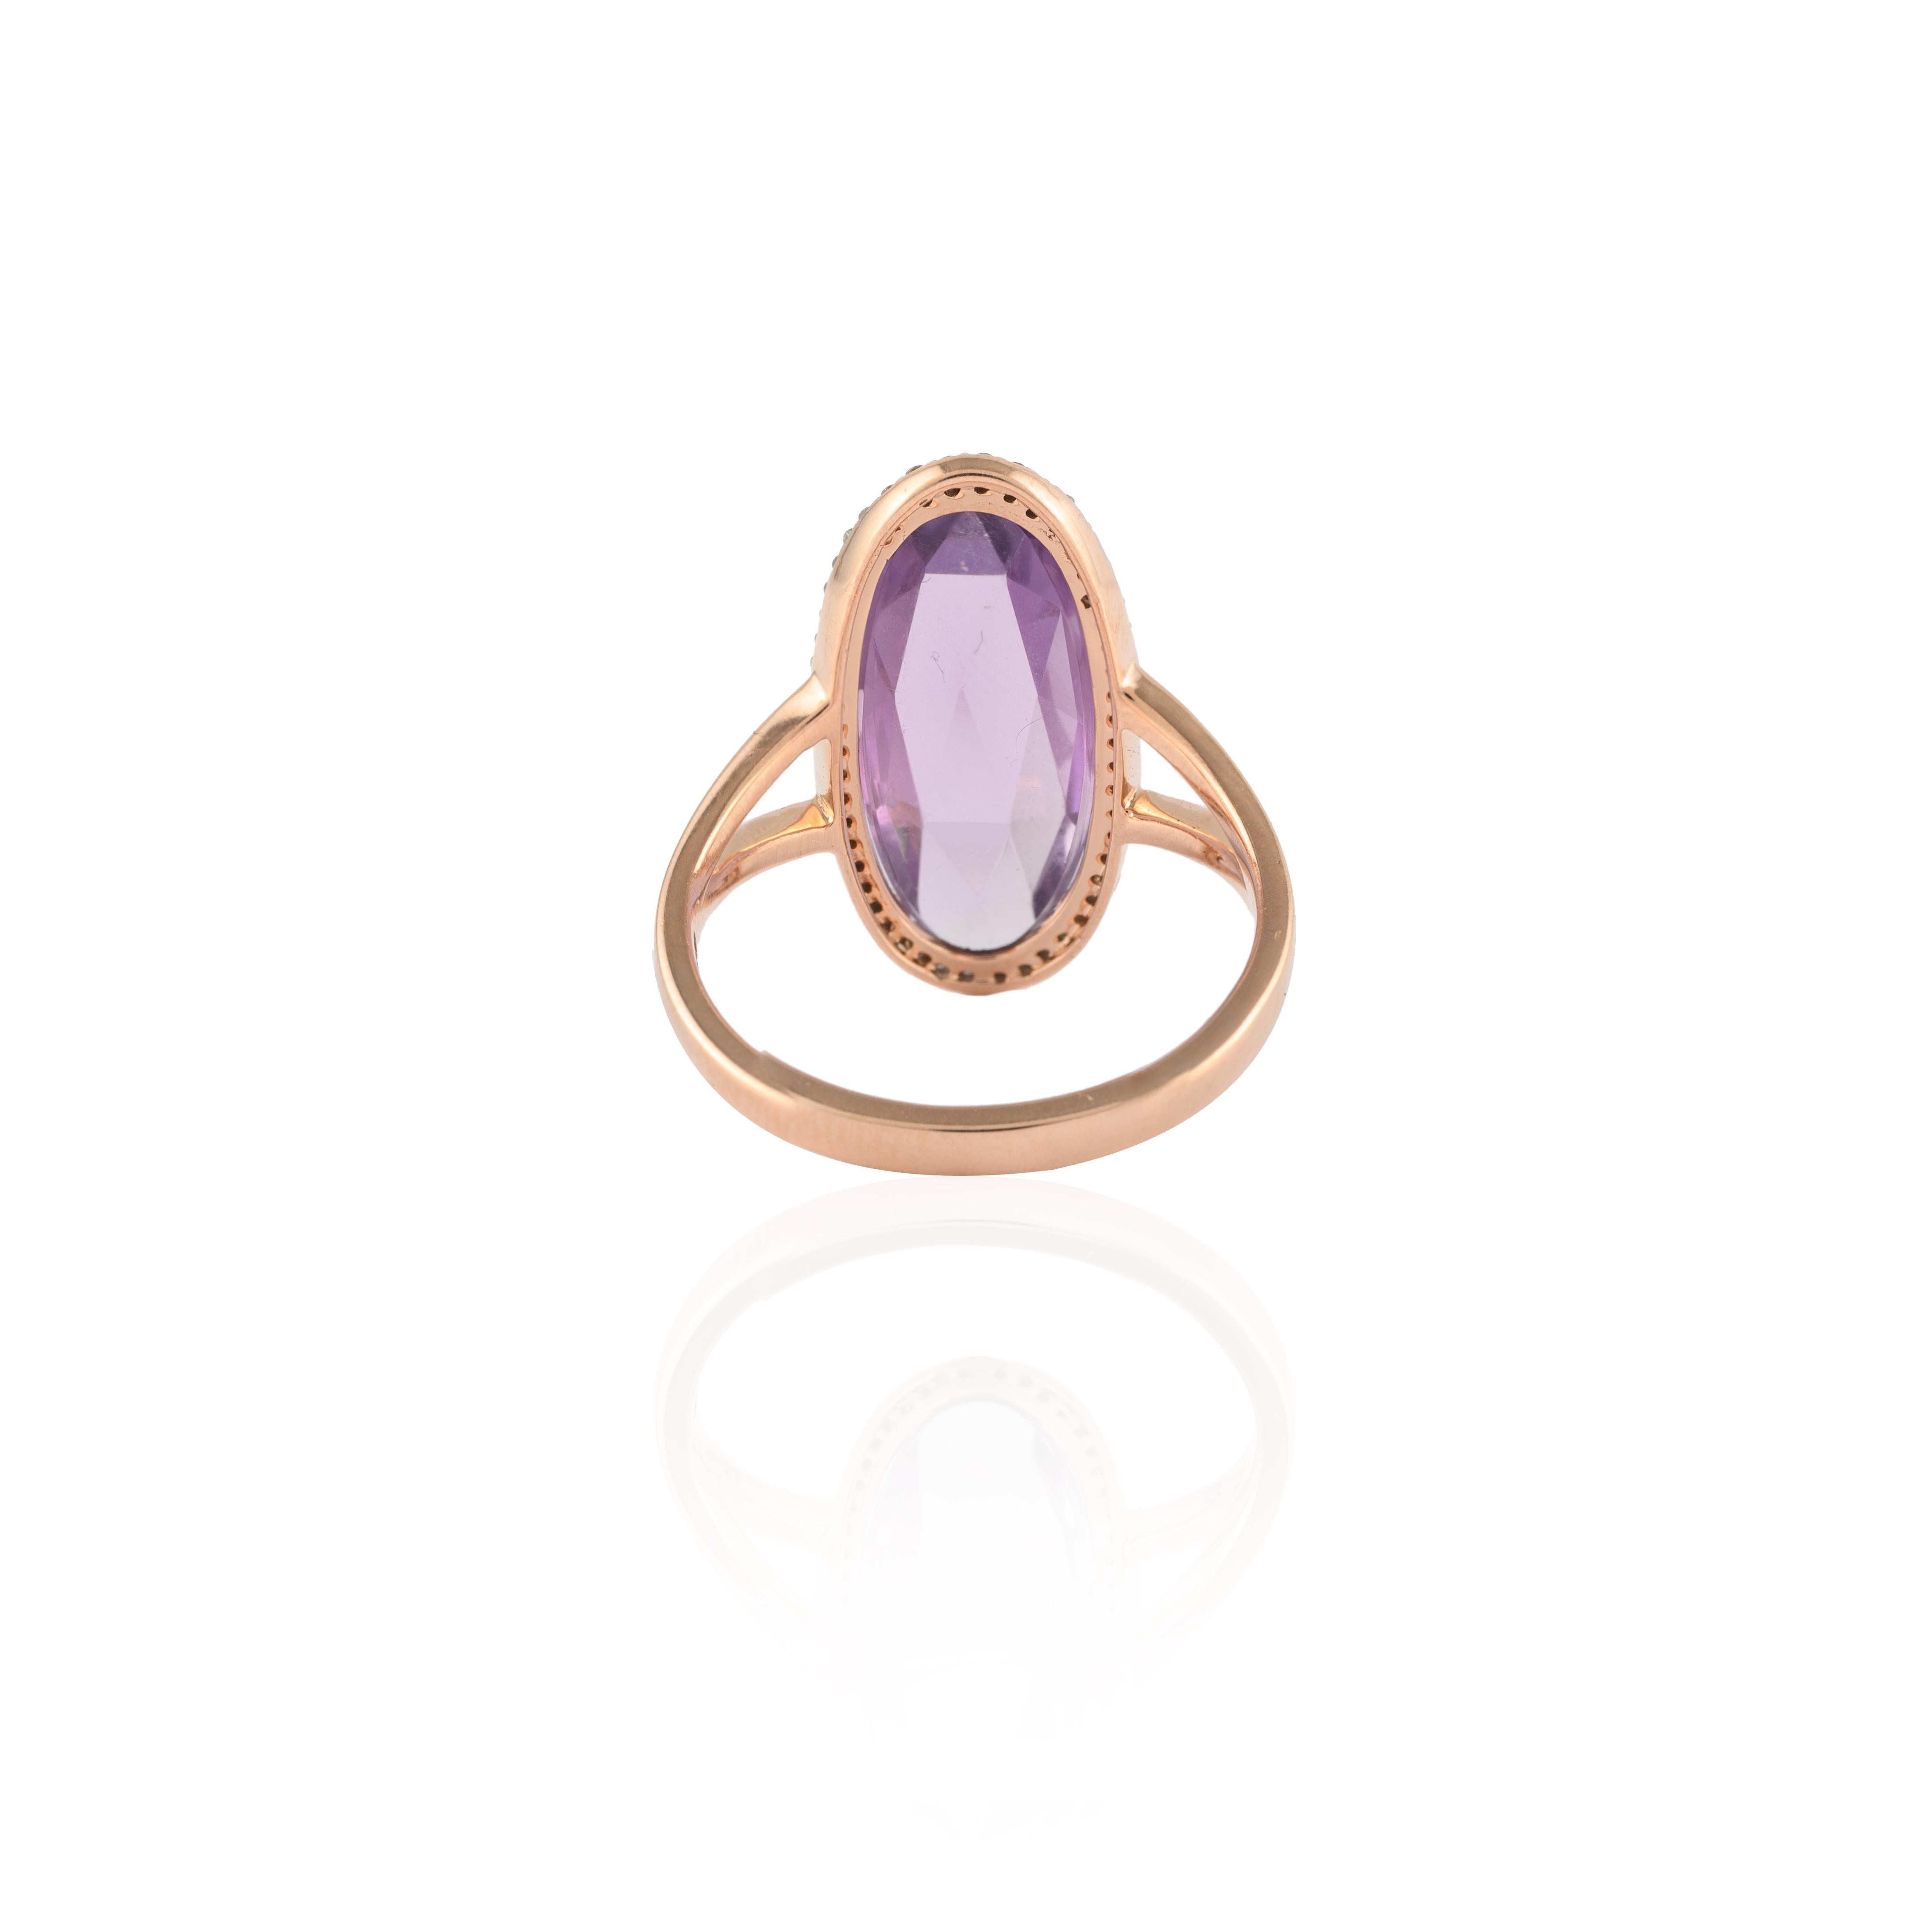 For Sale:  Statement 5.73 Carat Amethyst Diamond Ring 14 Karat Solid Rose Gold 8